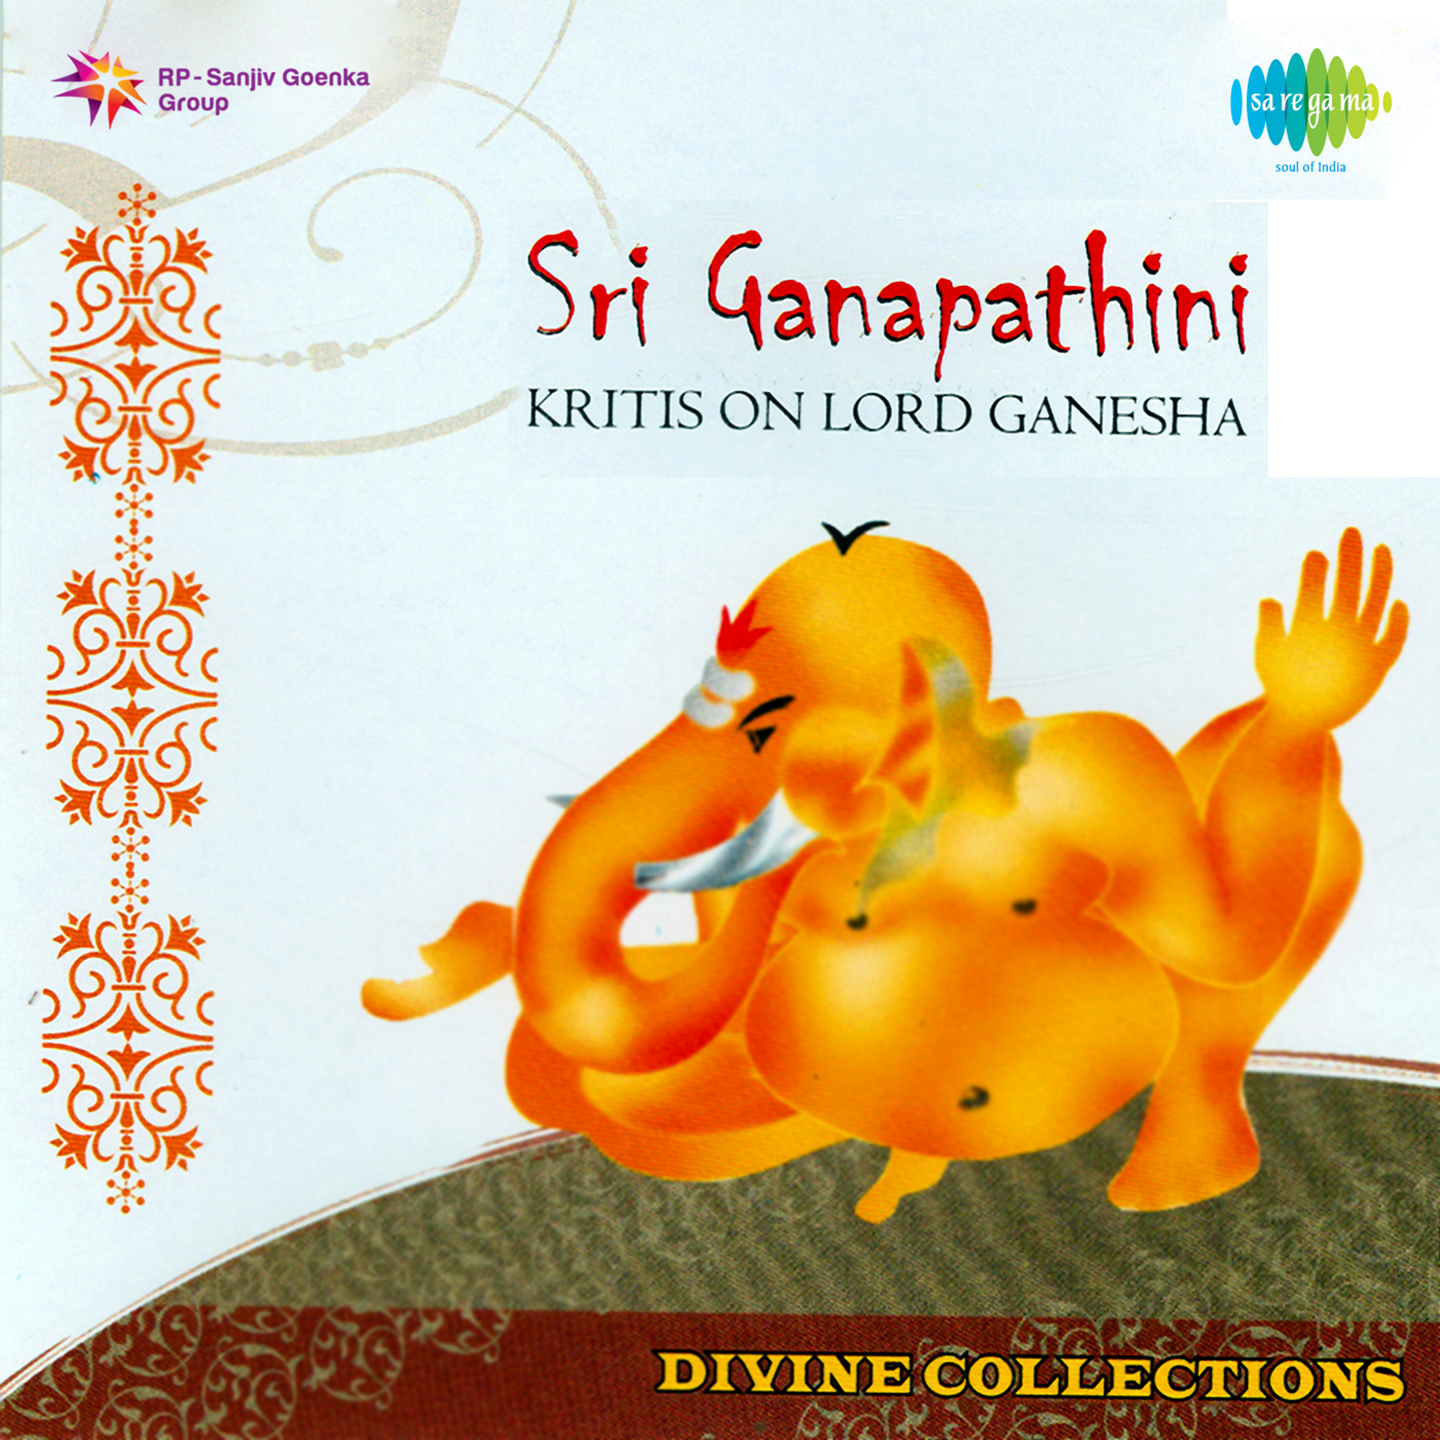 Sri Ganapathinee